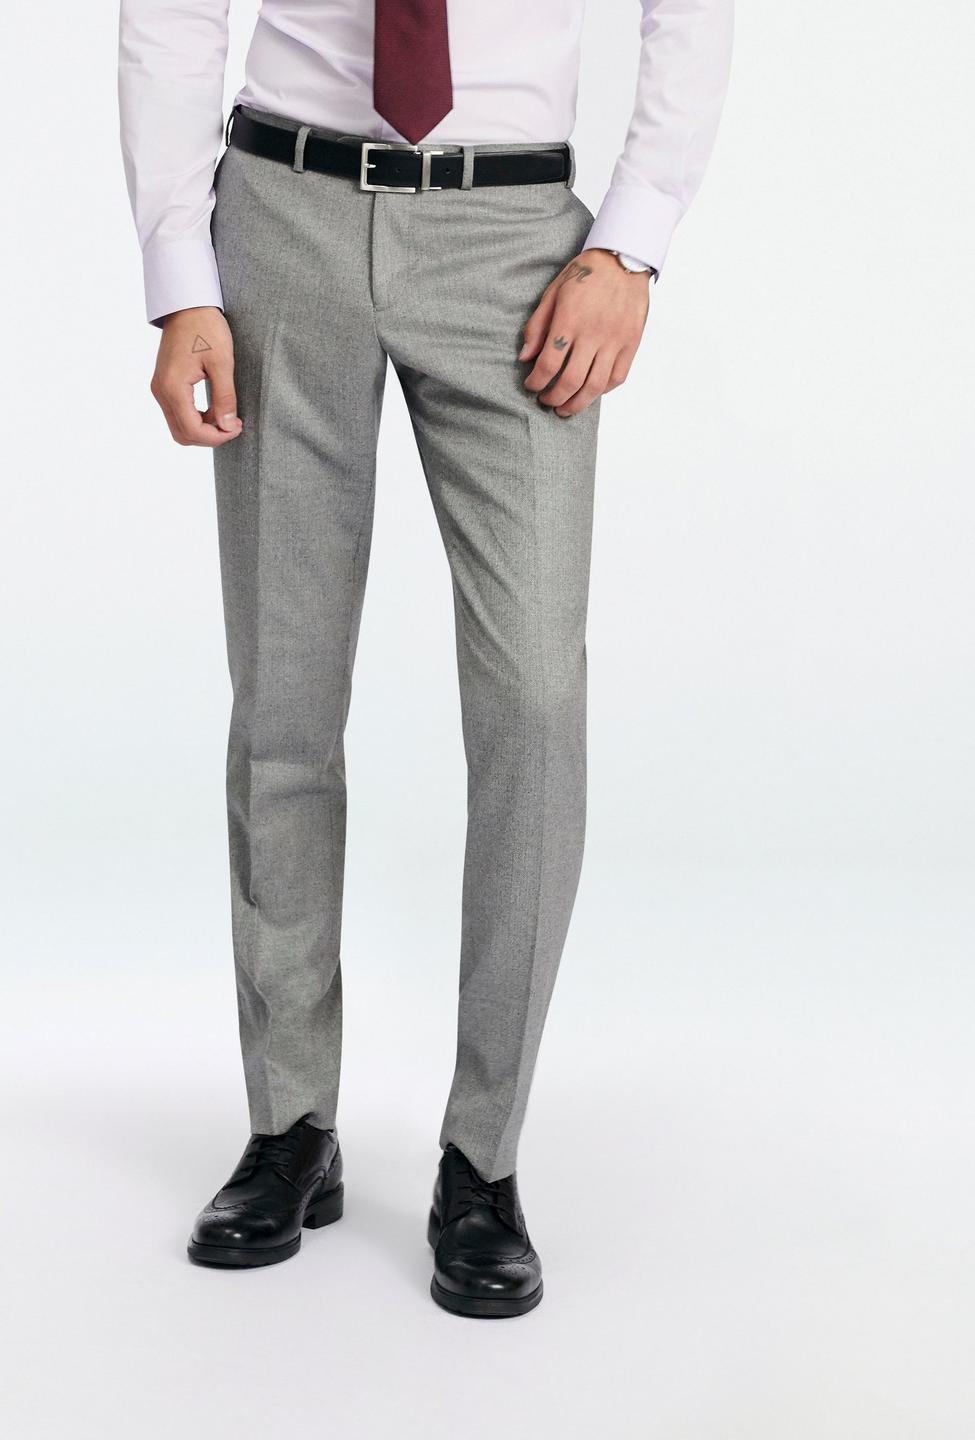 Gray pants - Prescot Herringbone Design from Seasonal Indochino Collection